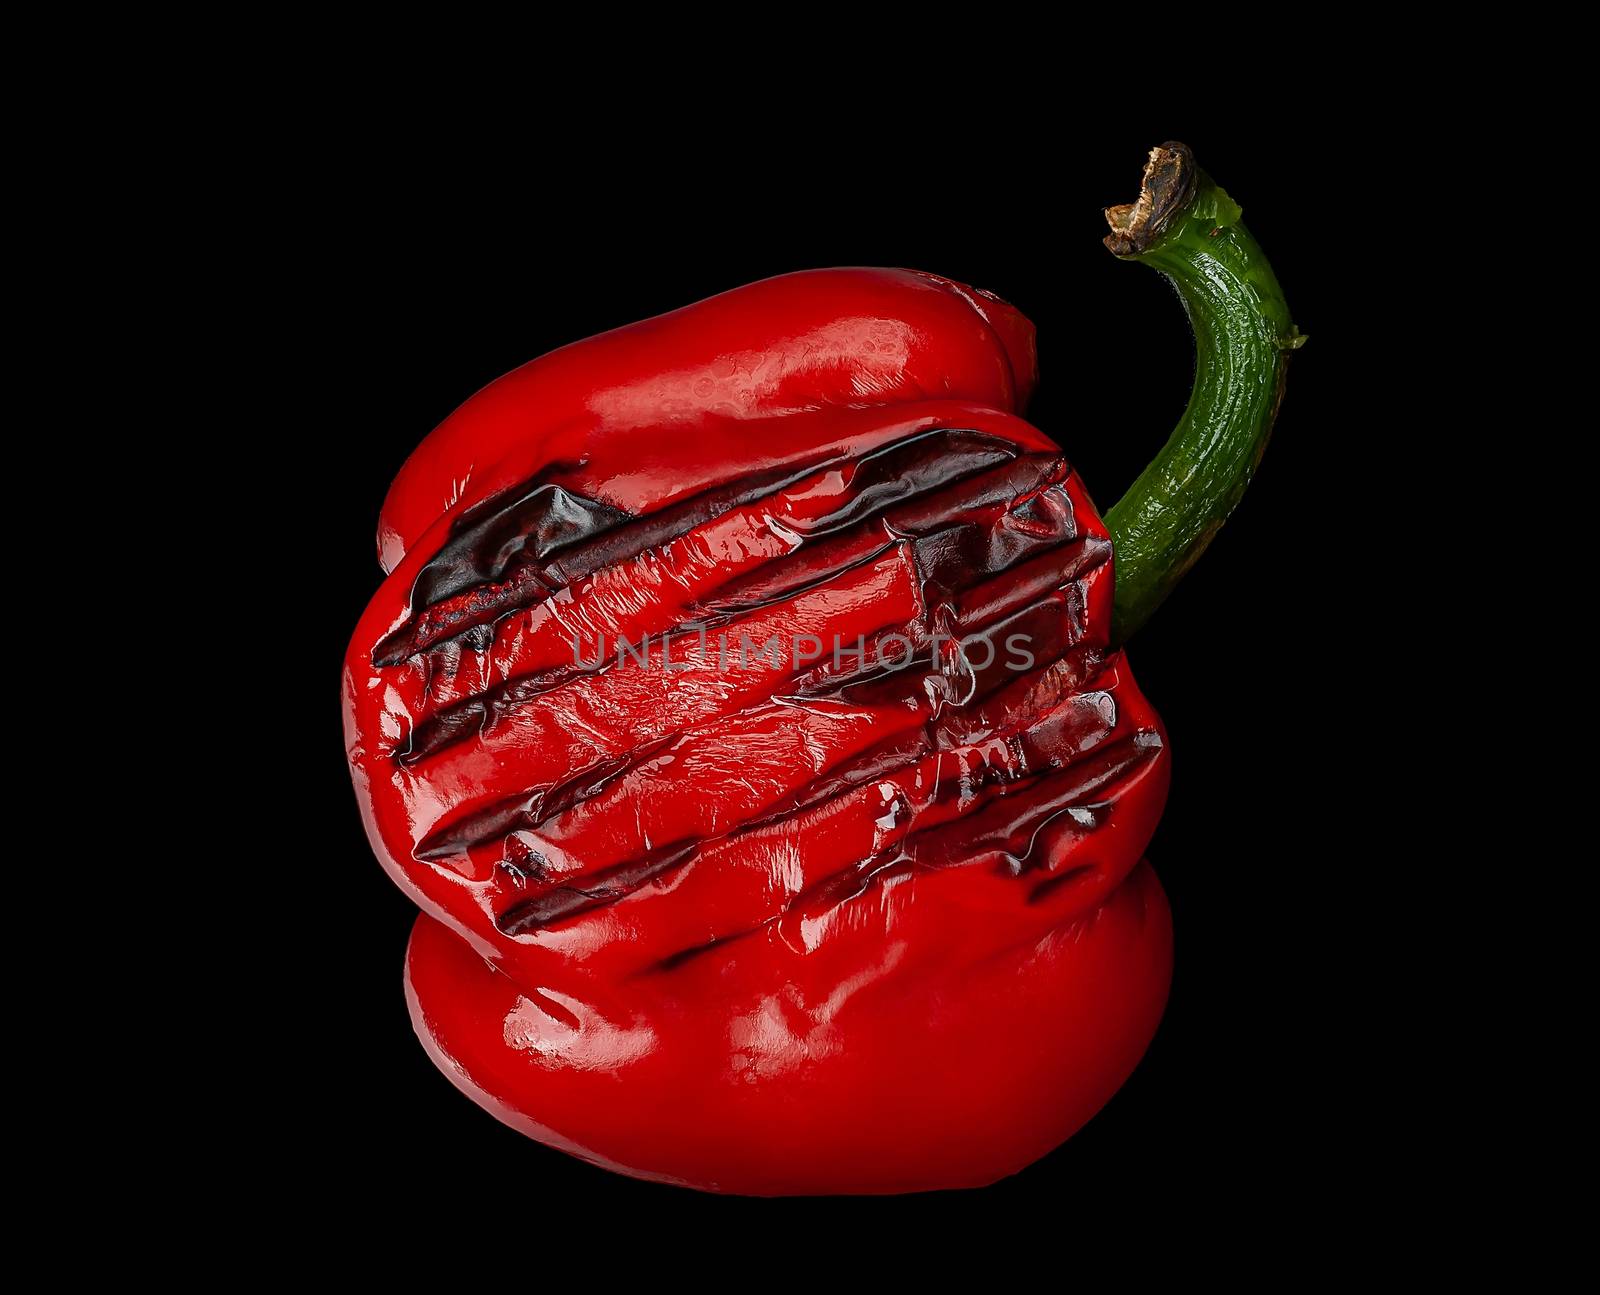 Grilled red pepper on black background. Paprika.